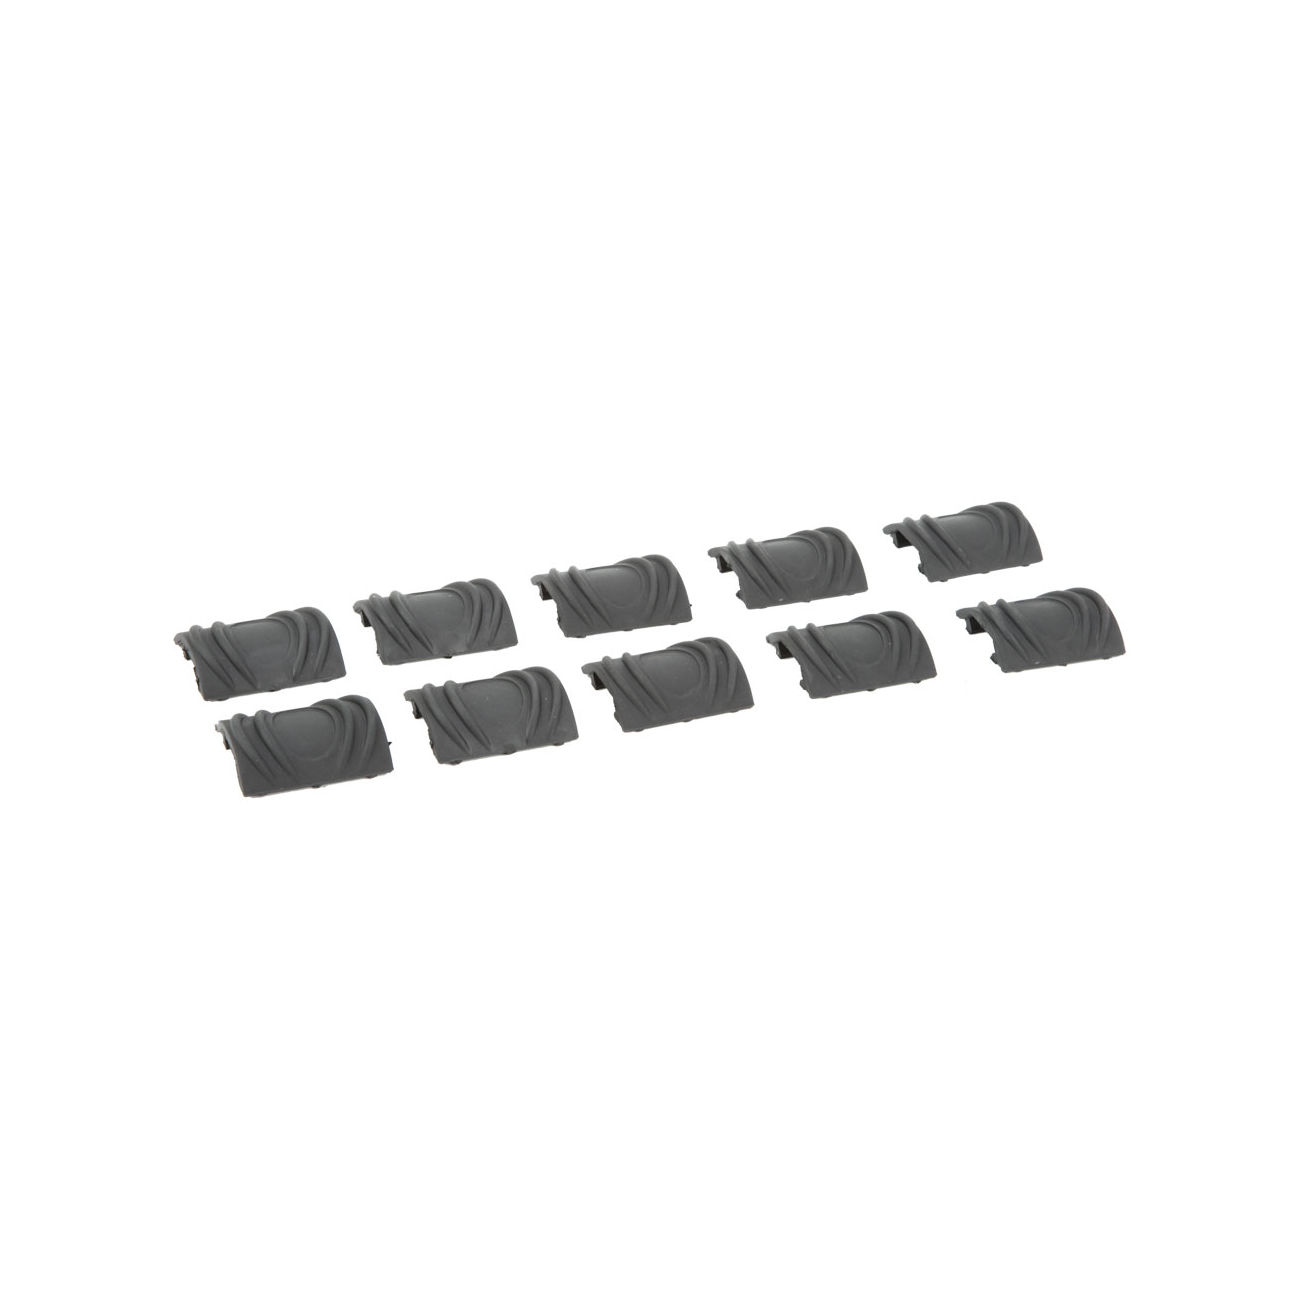 Element TD-Style Rubber Rail Covers kurz 10 Stck - schwarz